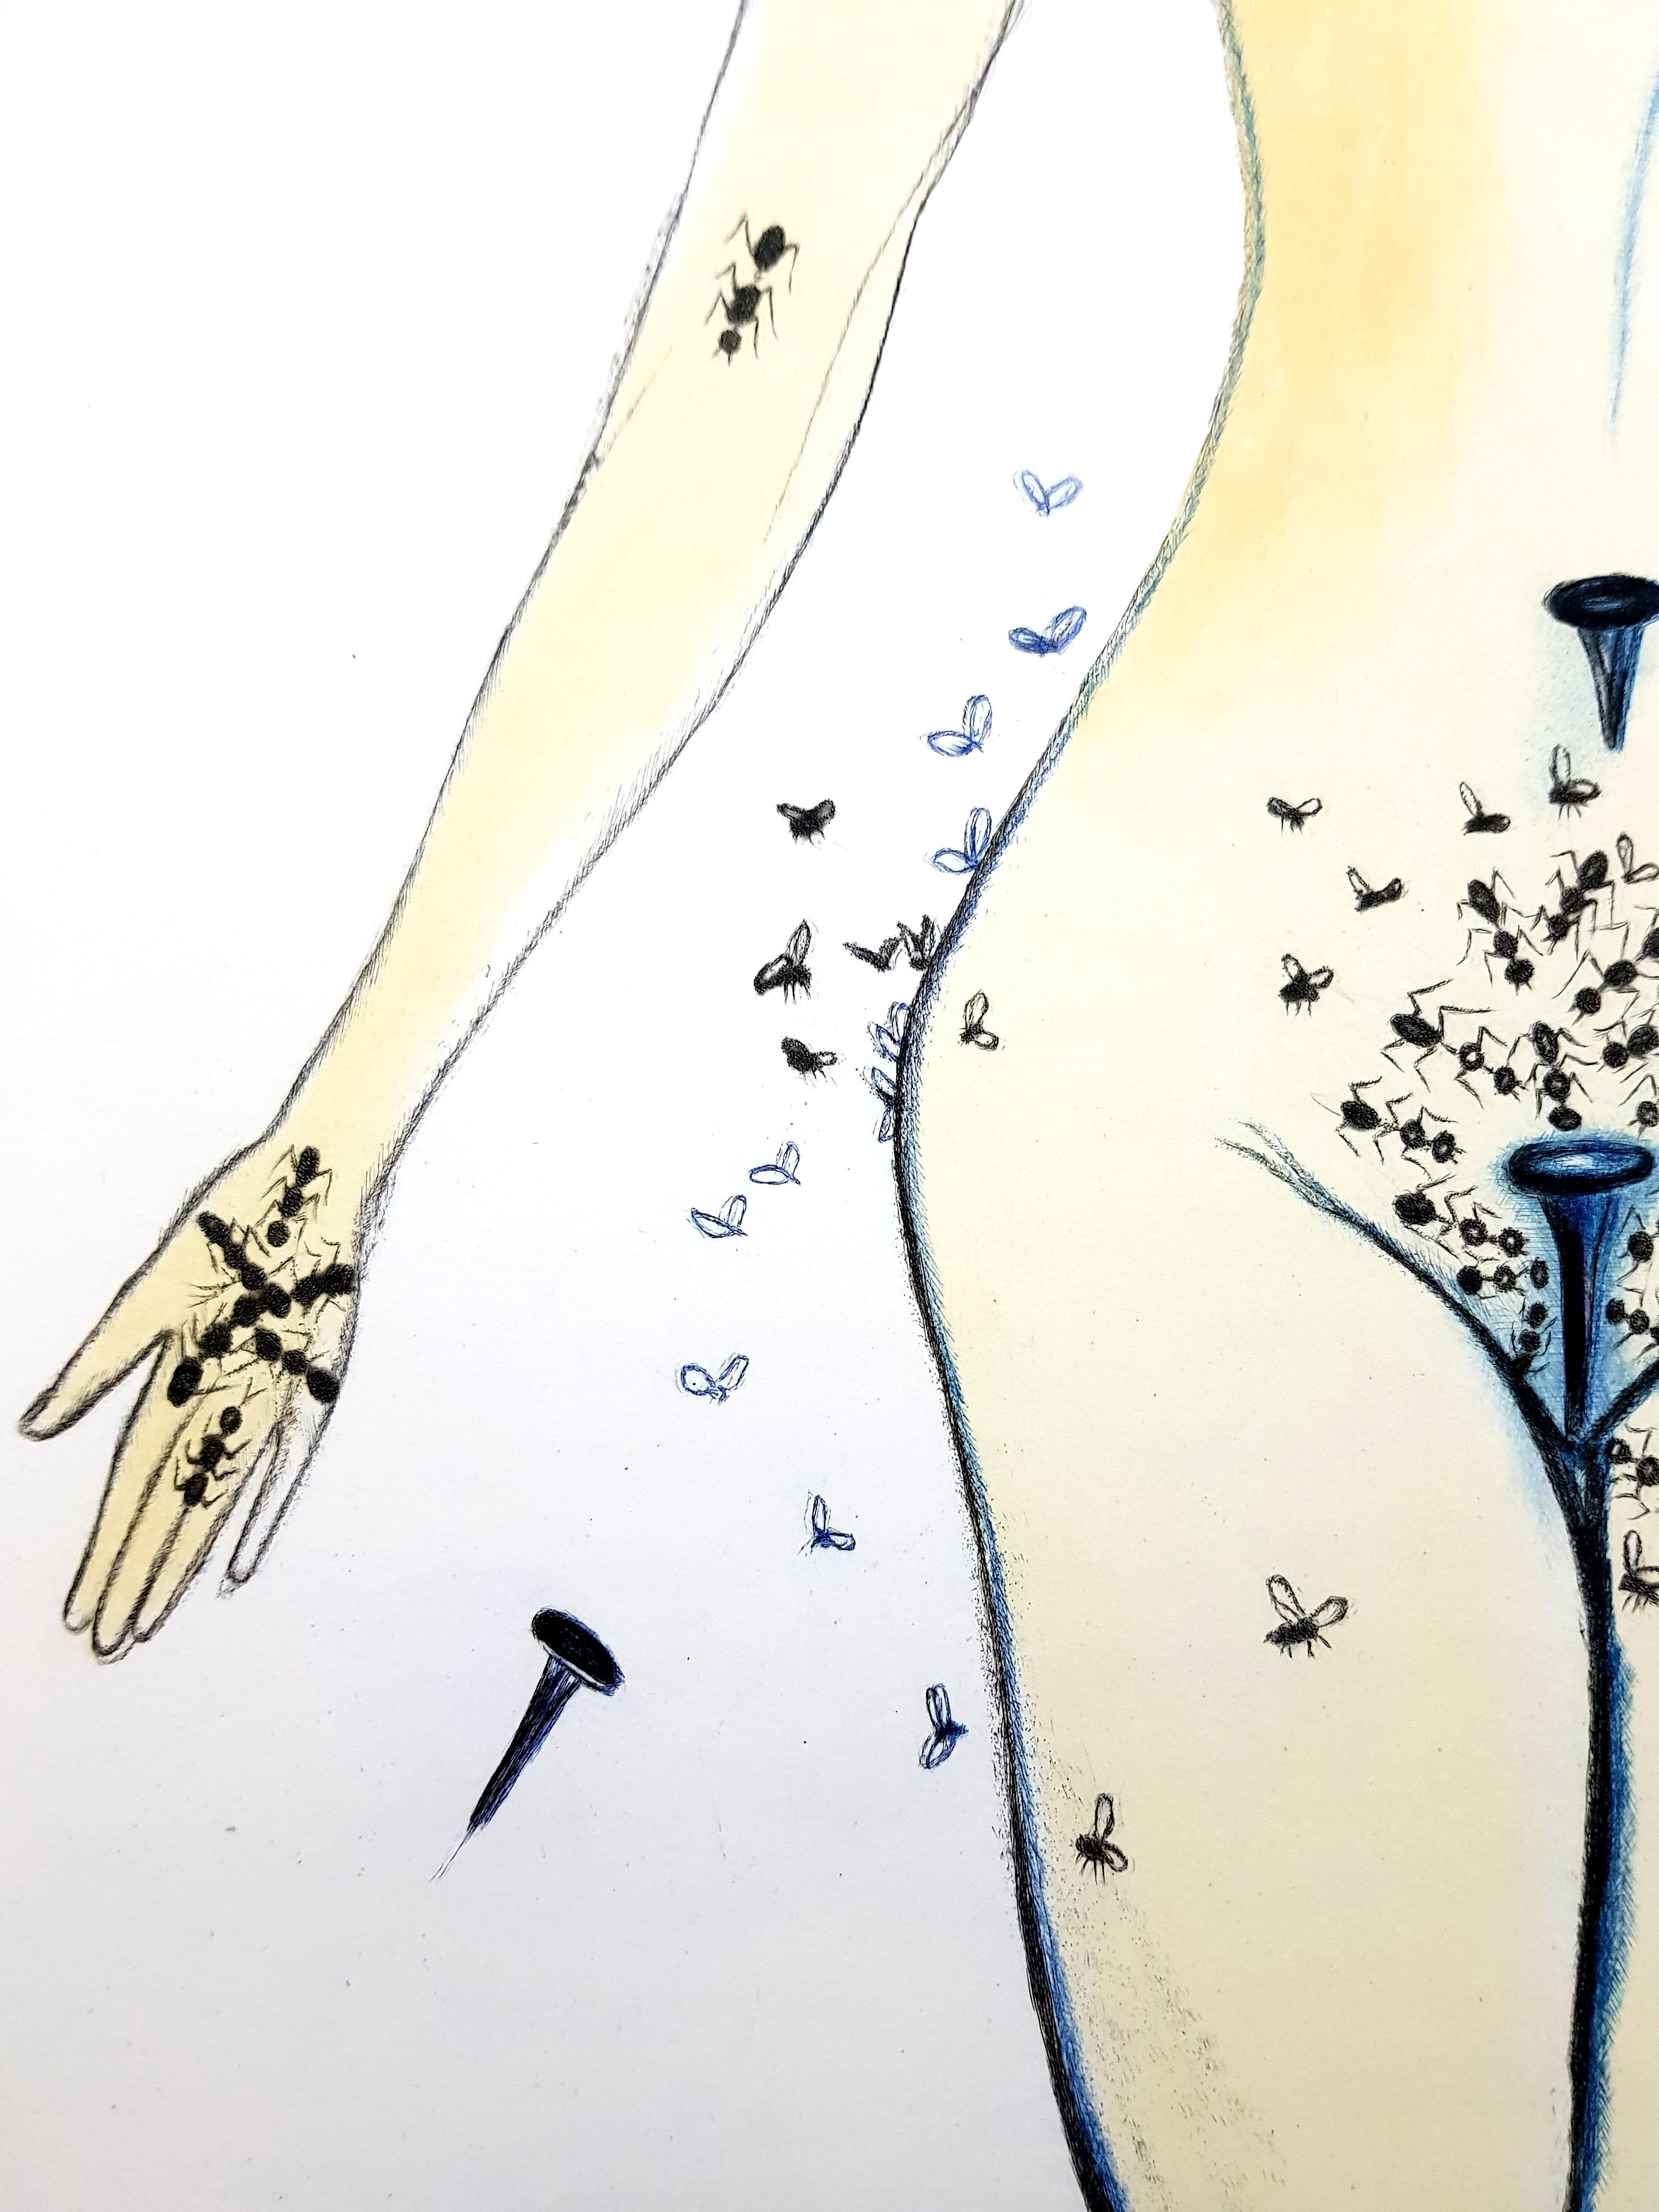 Salvador Dali - Nails on Nude - Surrealist Print by Salvador Dalí